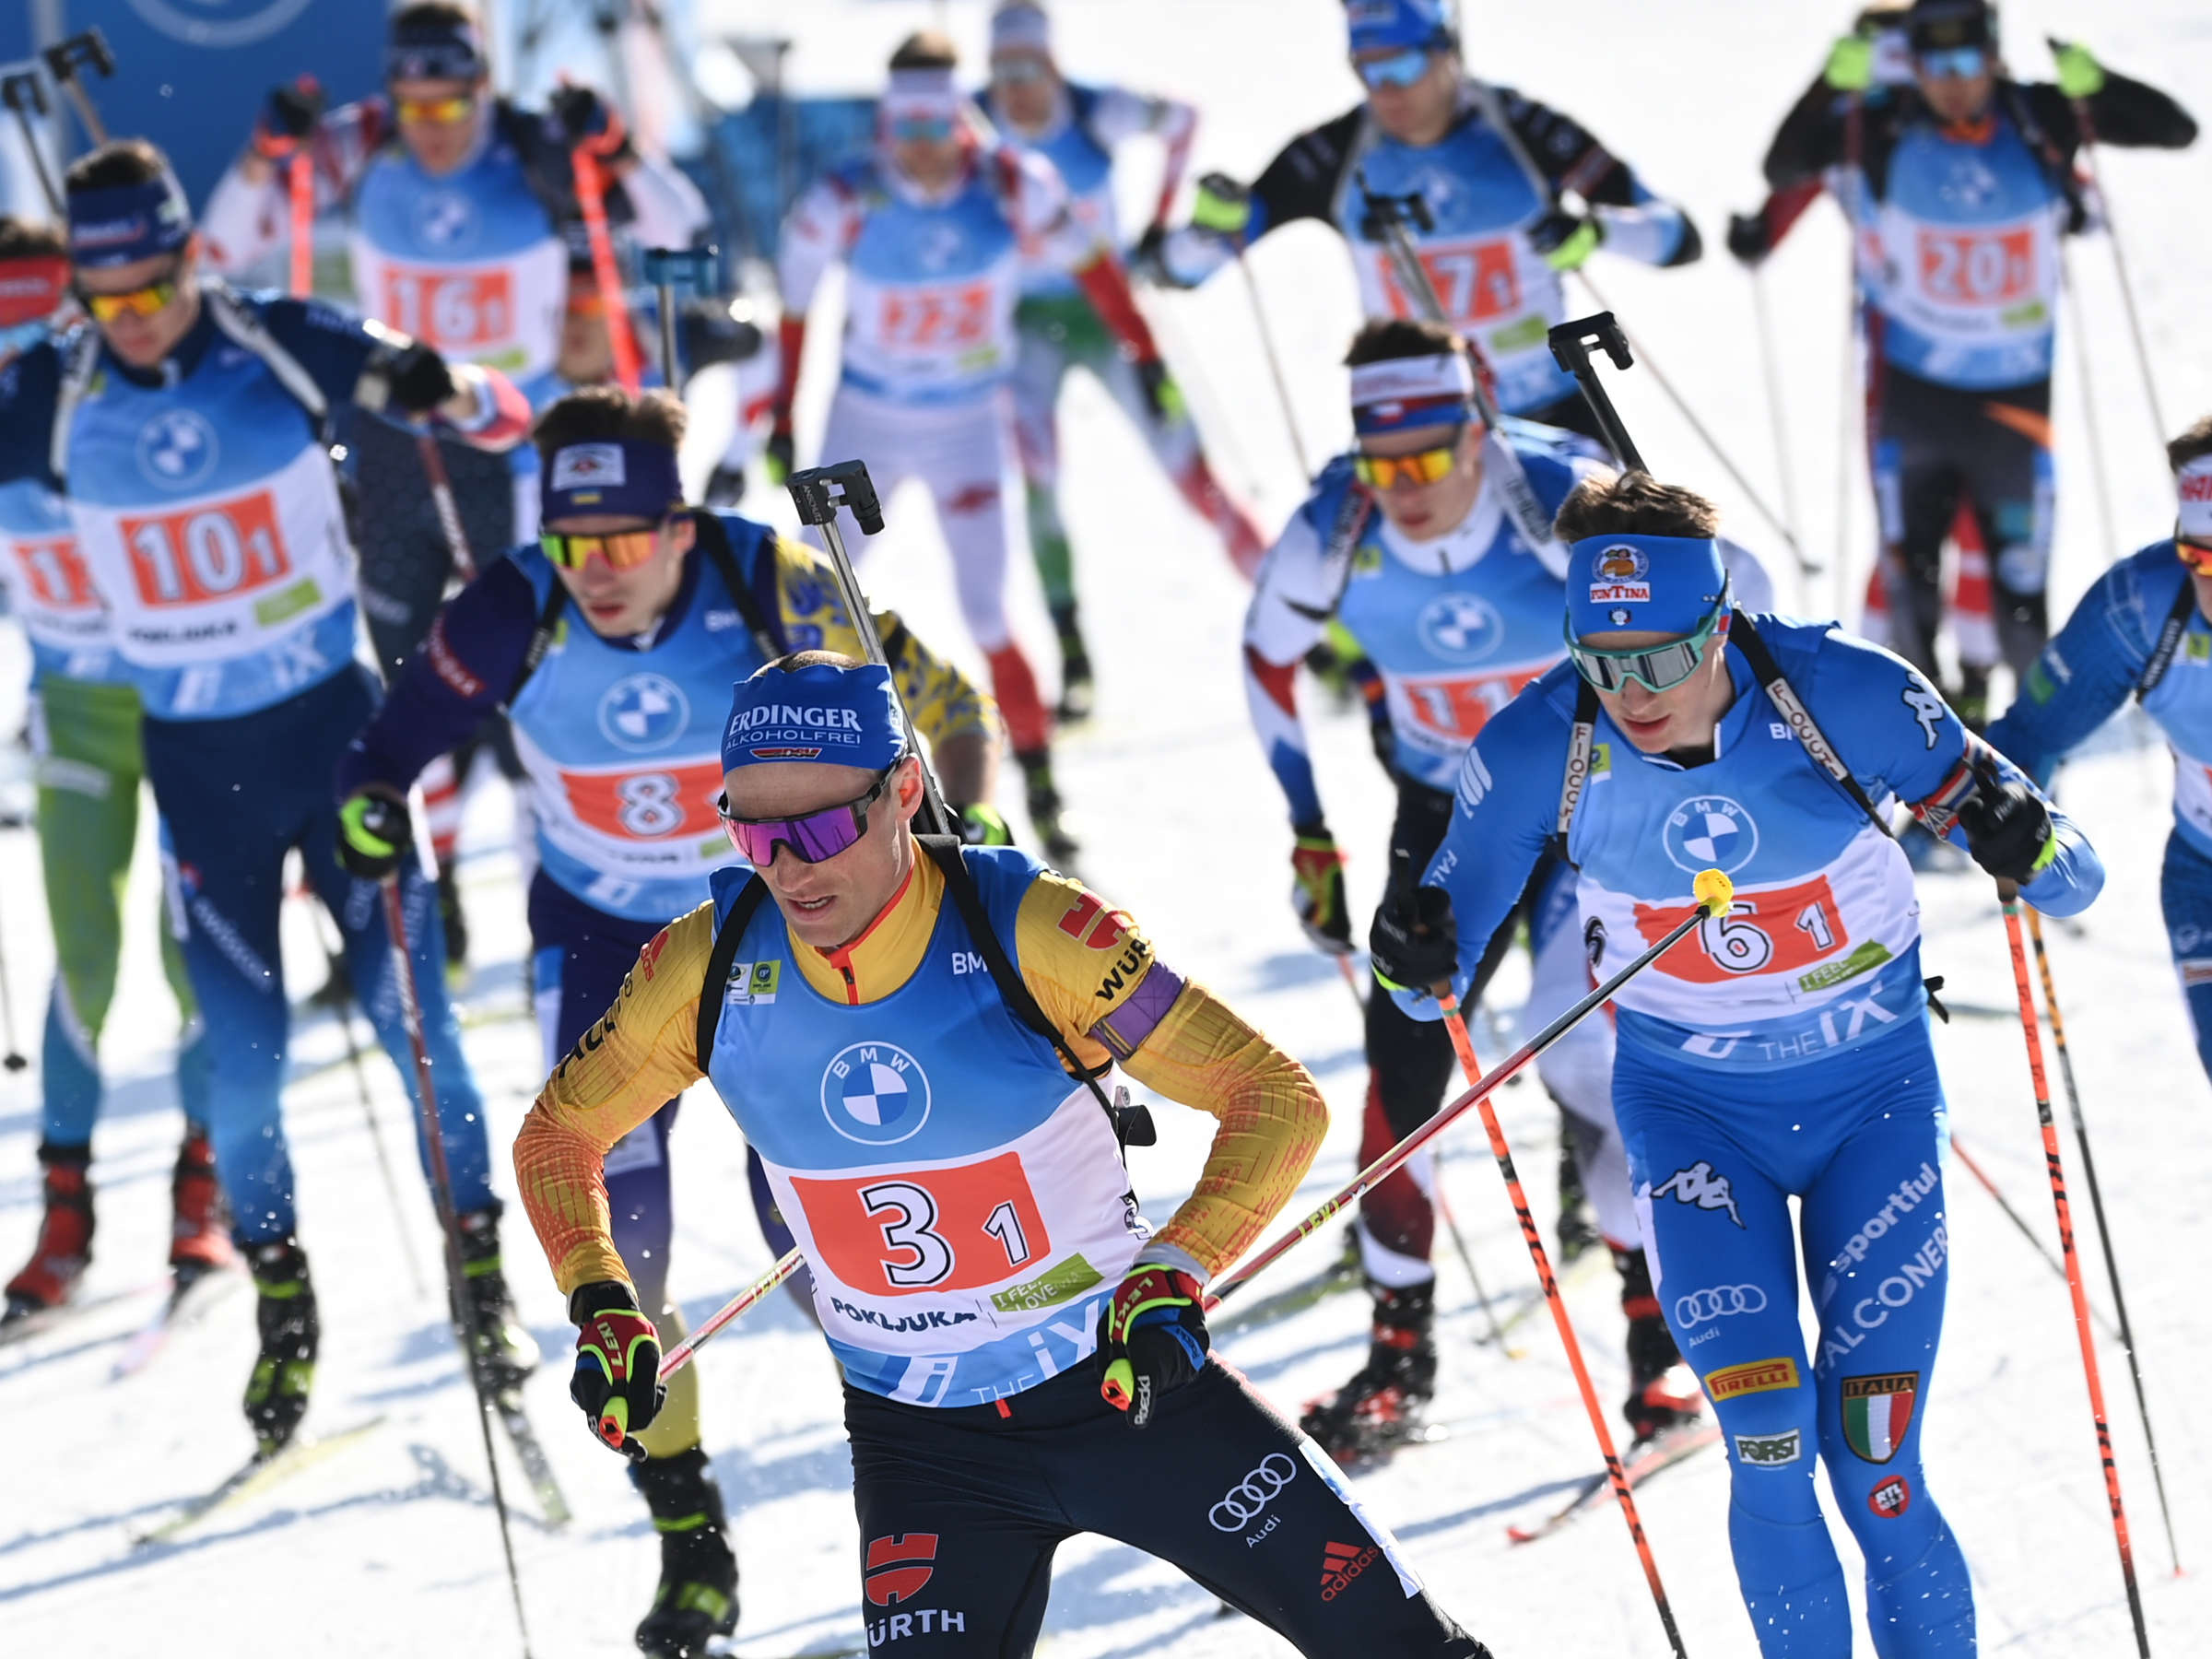 Biathlon: Biathletes, World Cup 2021/2022, Cross-country ski run, Winter sport. 2400x1800 HD Wallpaper.